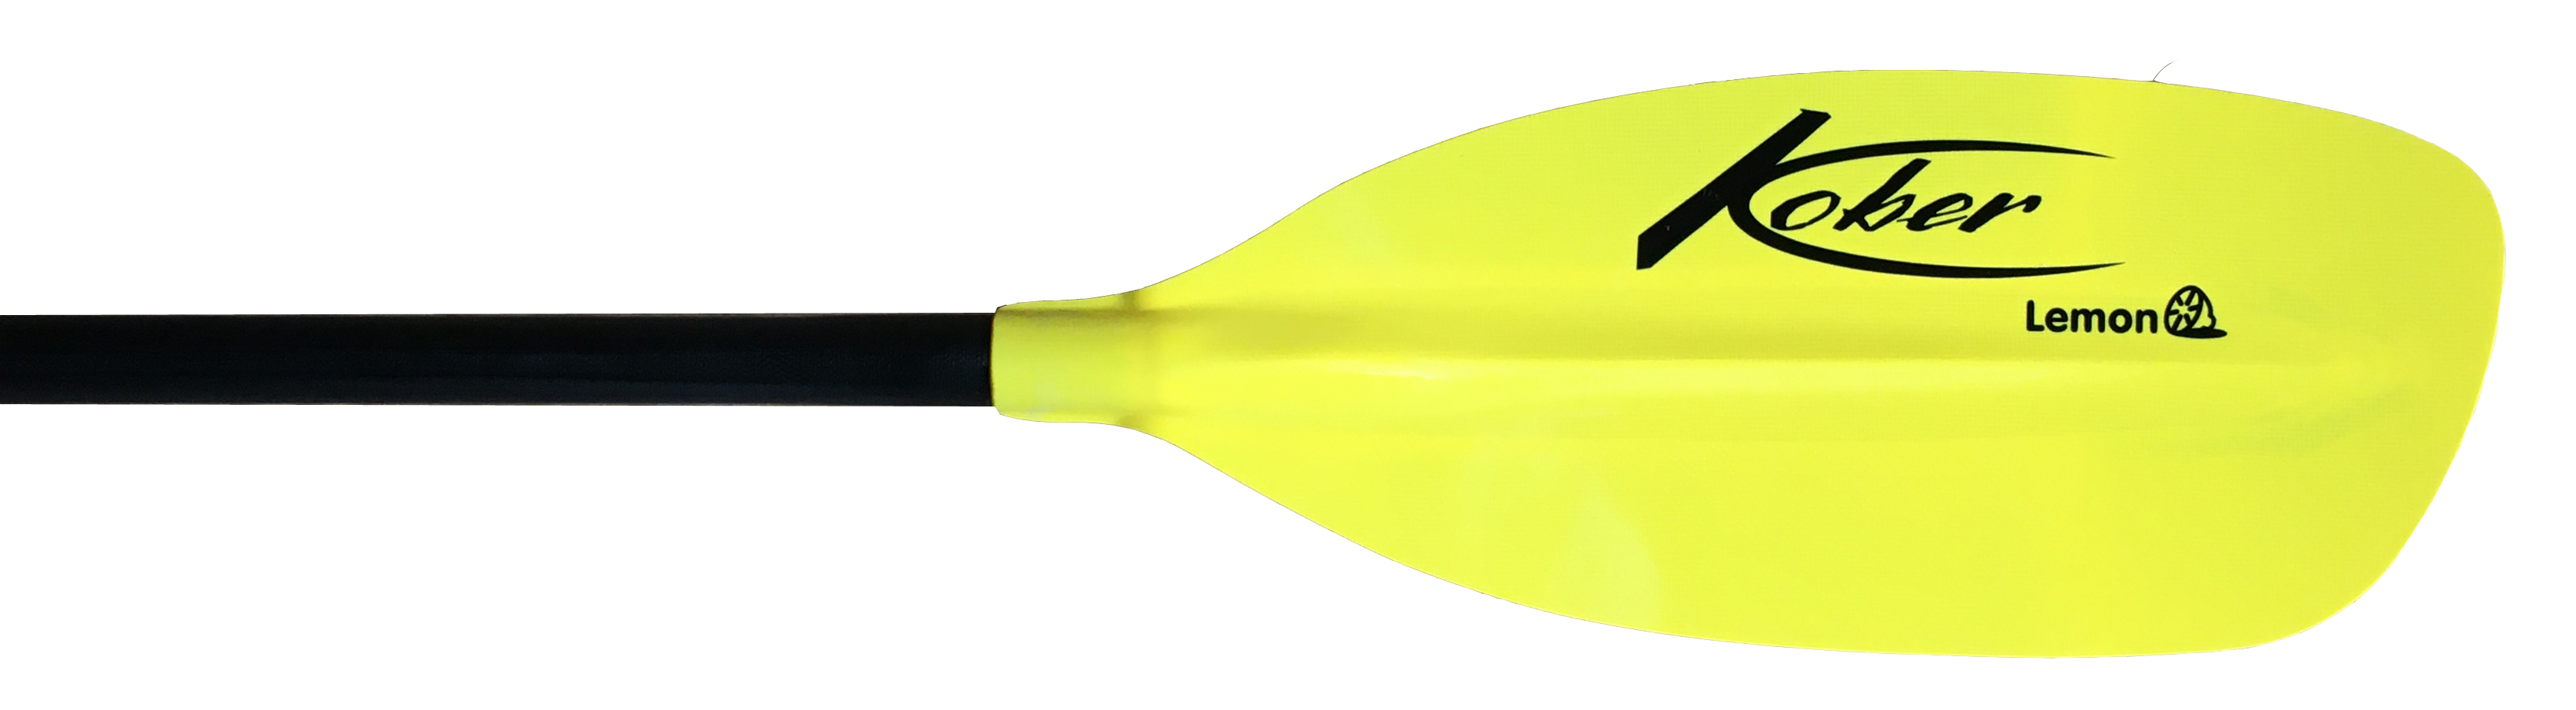 Kober Lemon Whitewater Paddle